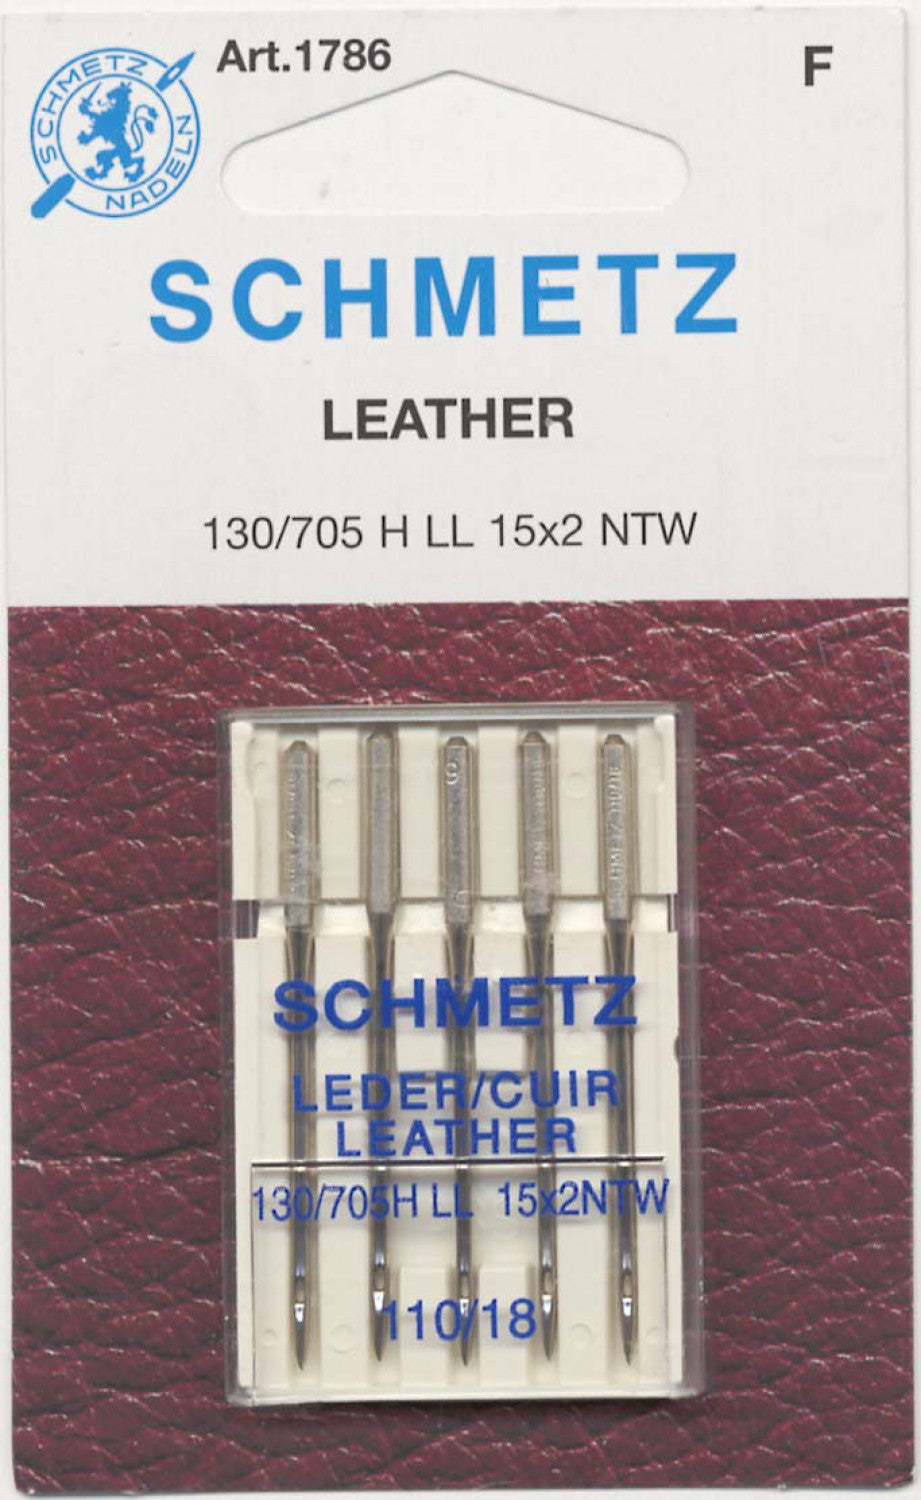 Schmetz Leather Needle - 110/18 - 1 Package of 5 Needles